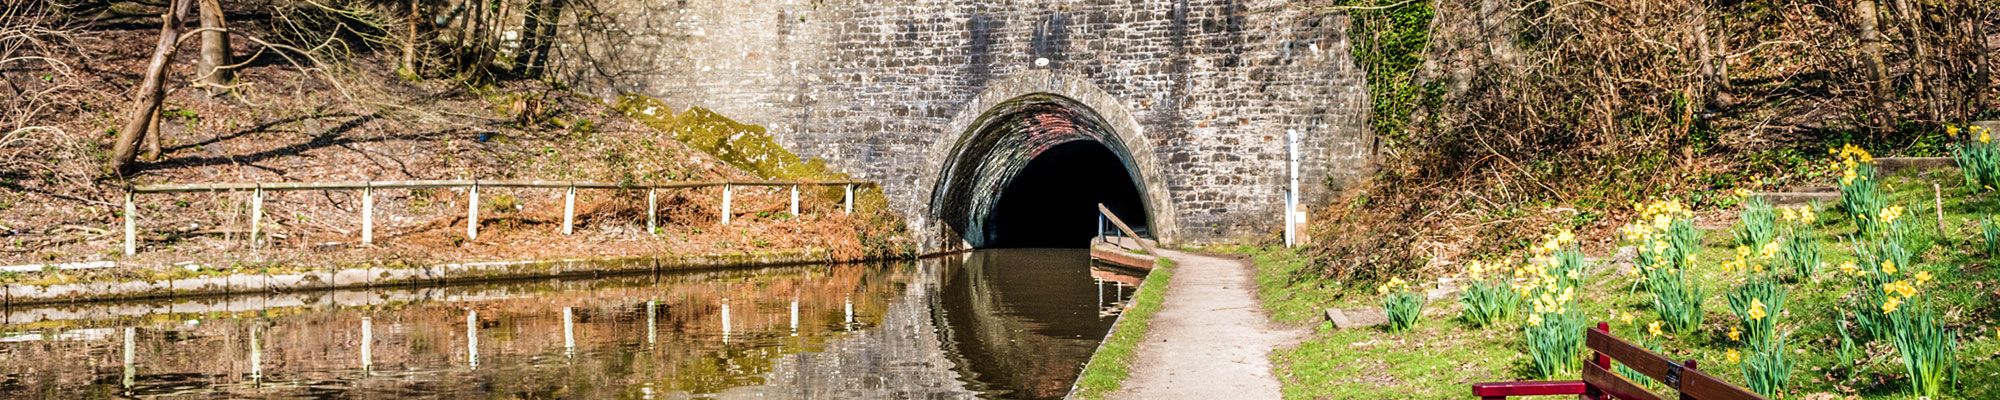 Canal bridge in Llangollen, North Wales